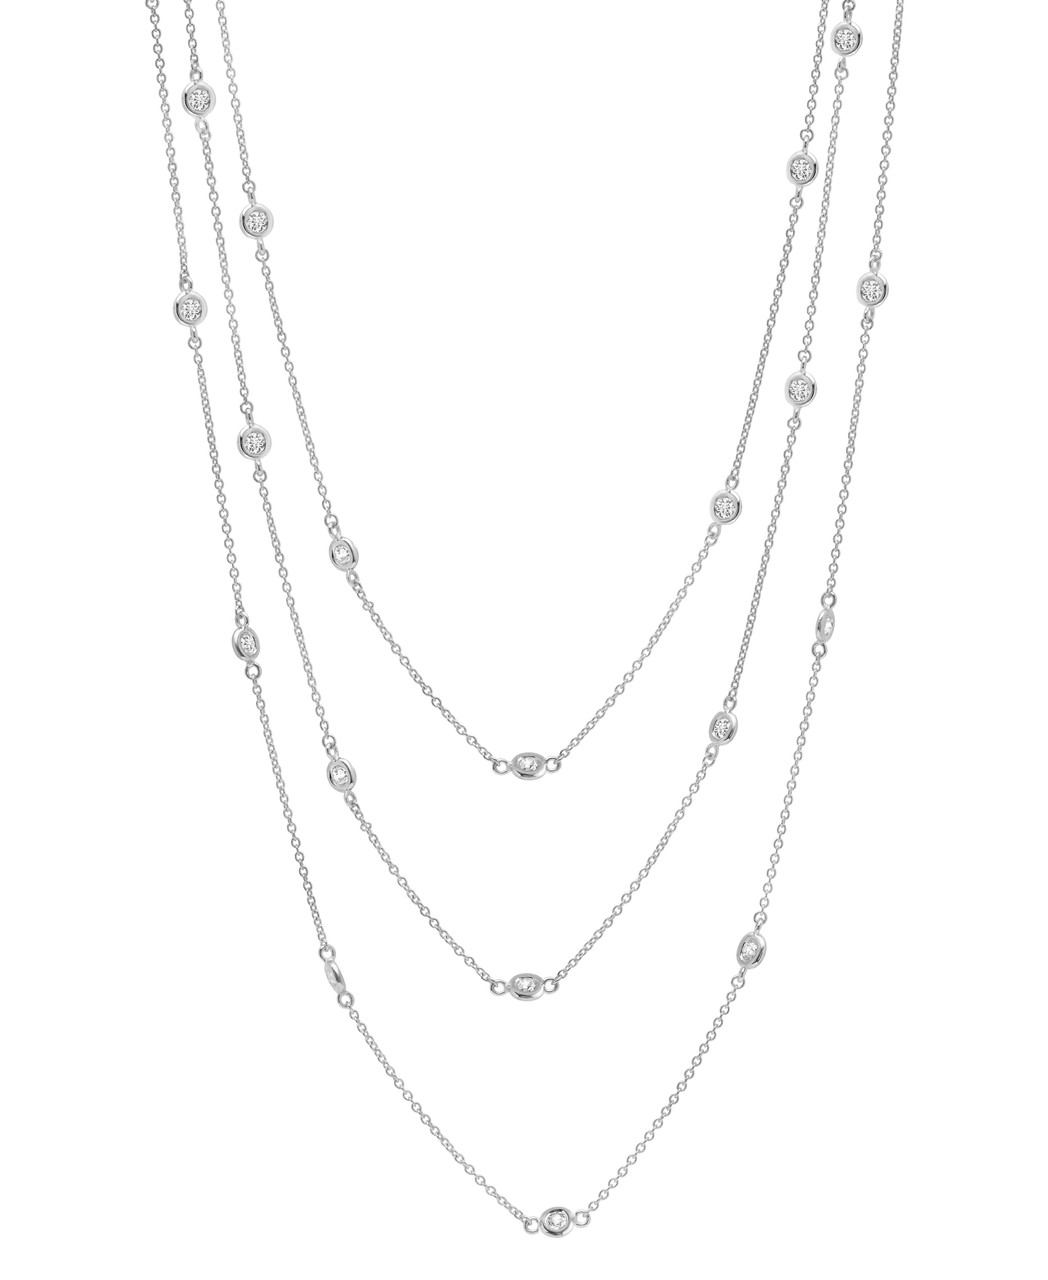 Crislu DBY Necklace | Best Jewelry Accents